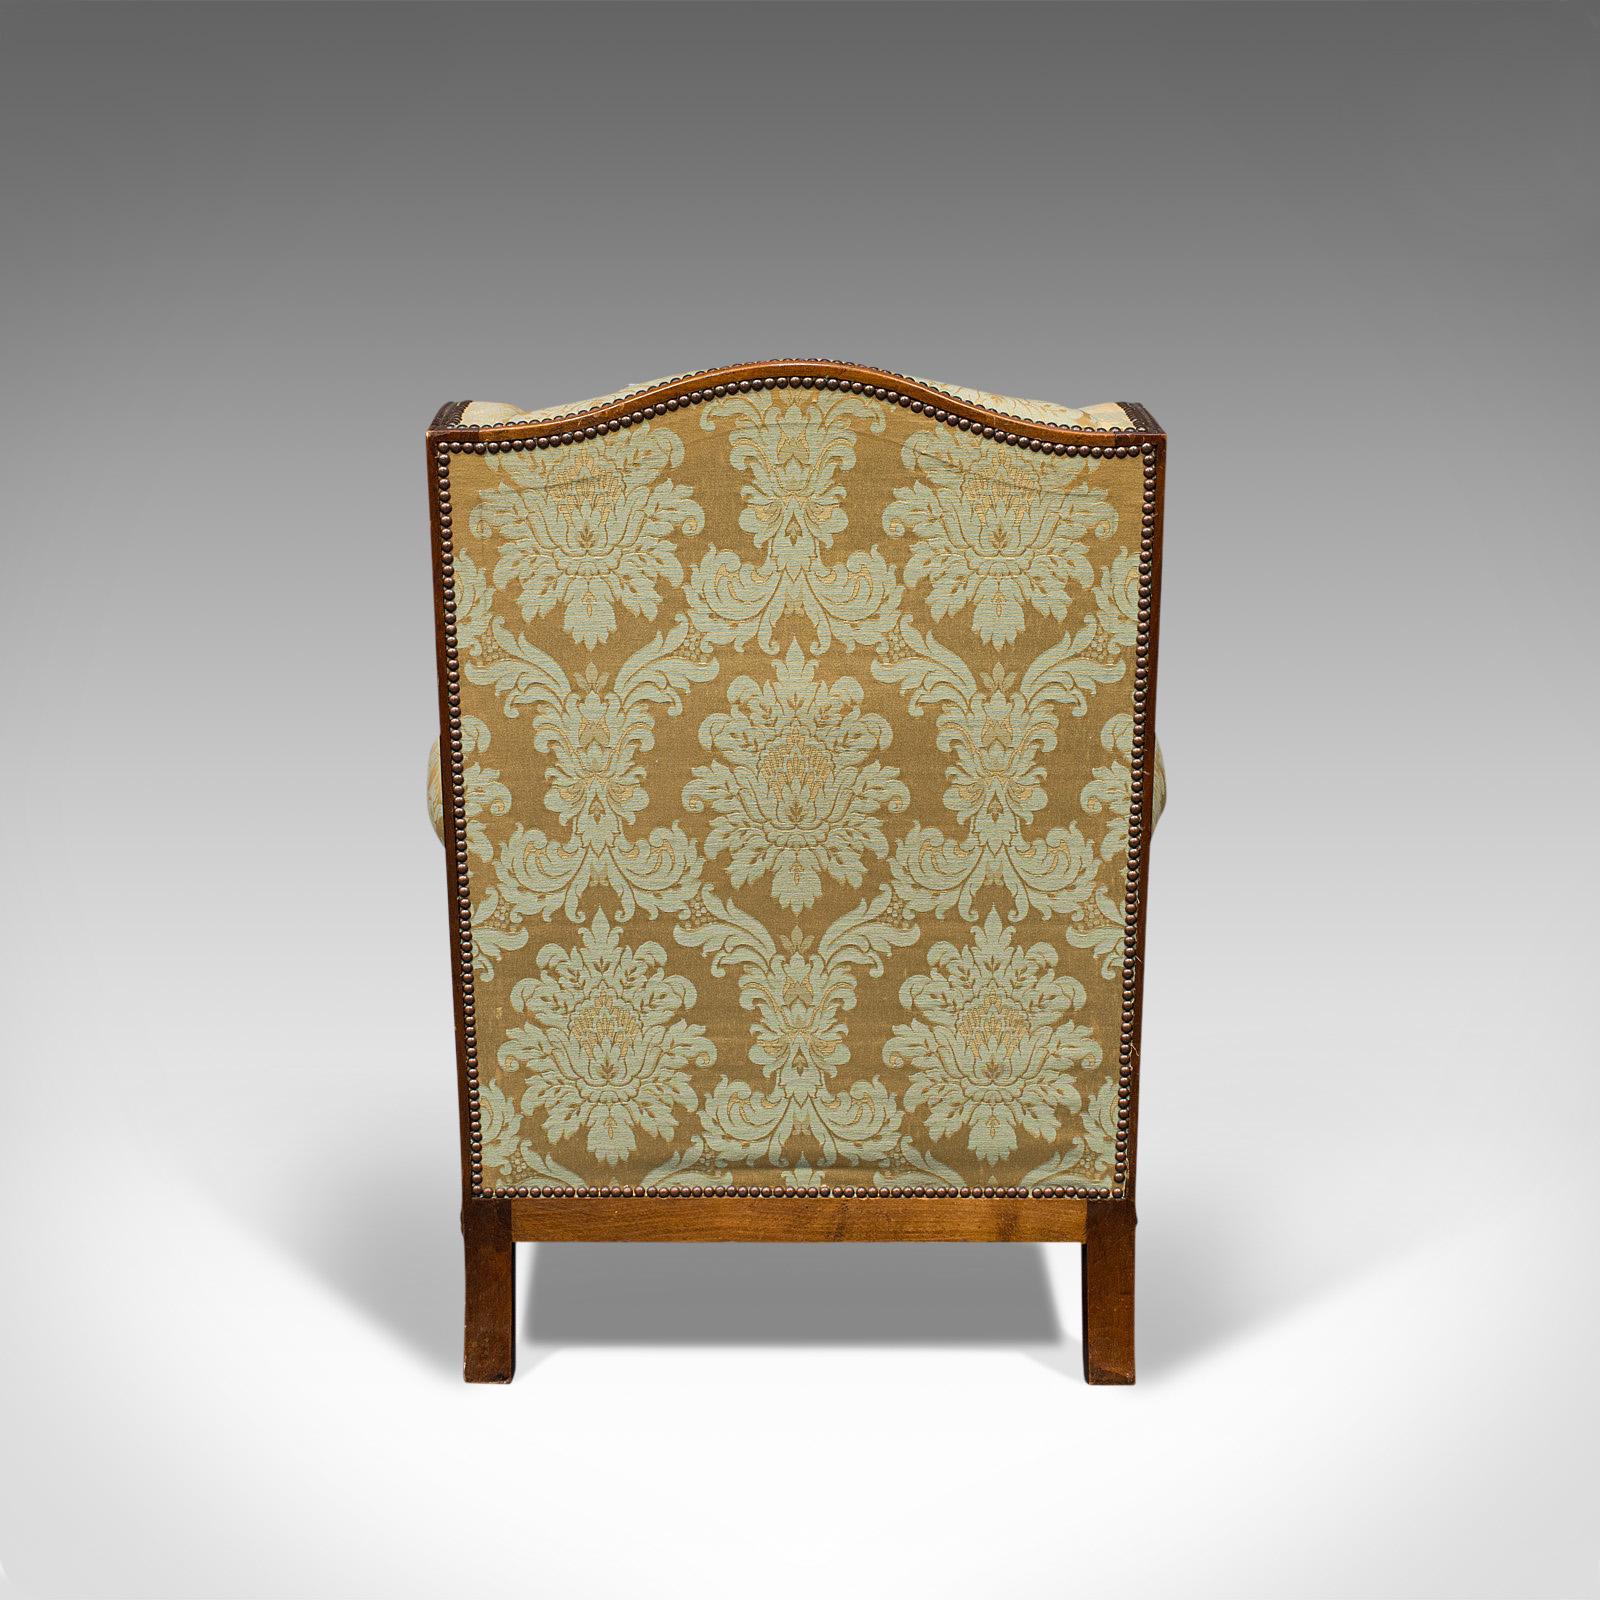 British Antique Wing-Back Armchair, English, Fireside, Lounge, Seat, Edwardian, 1910